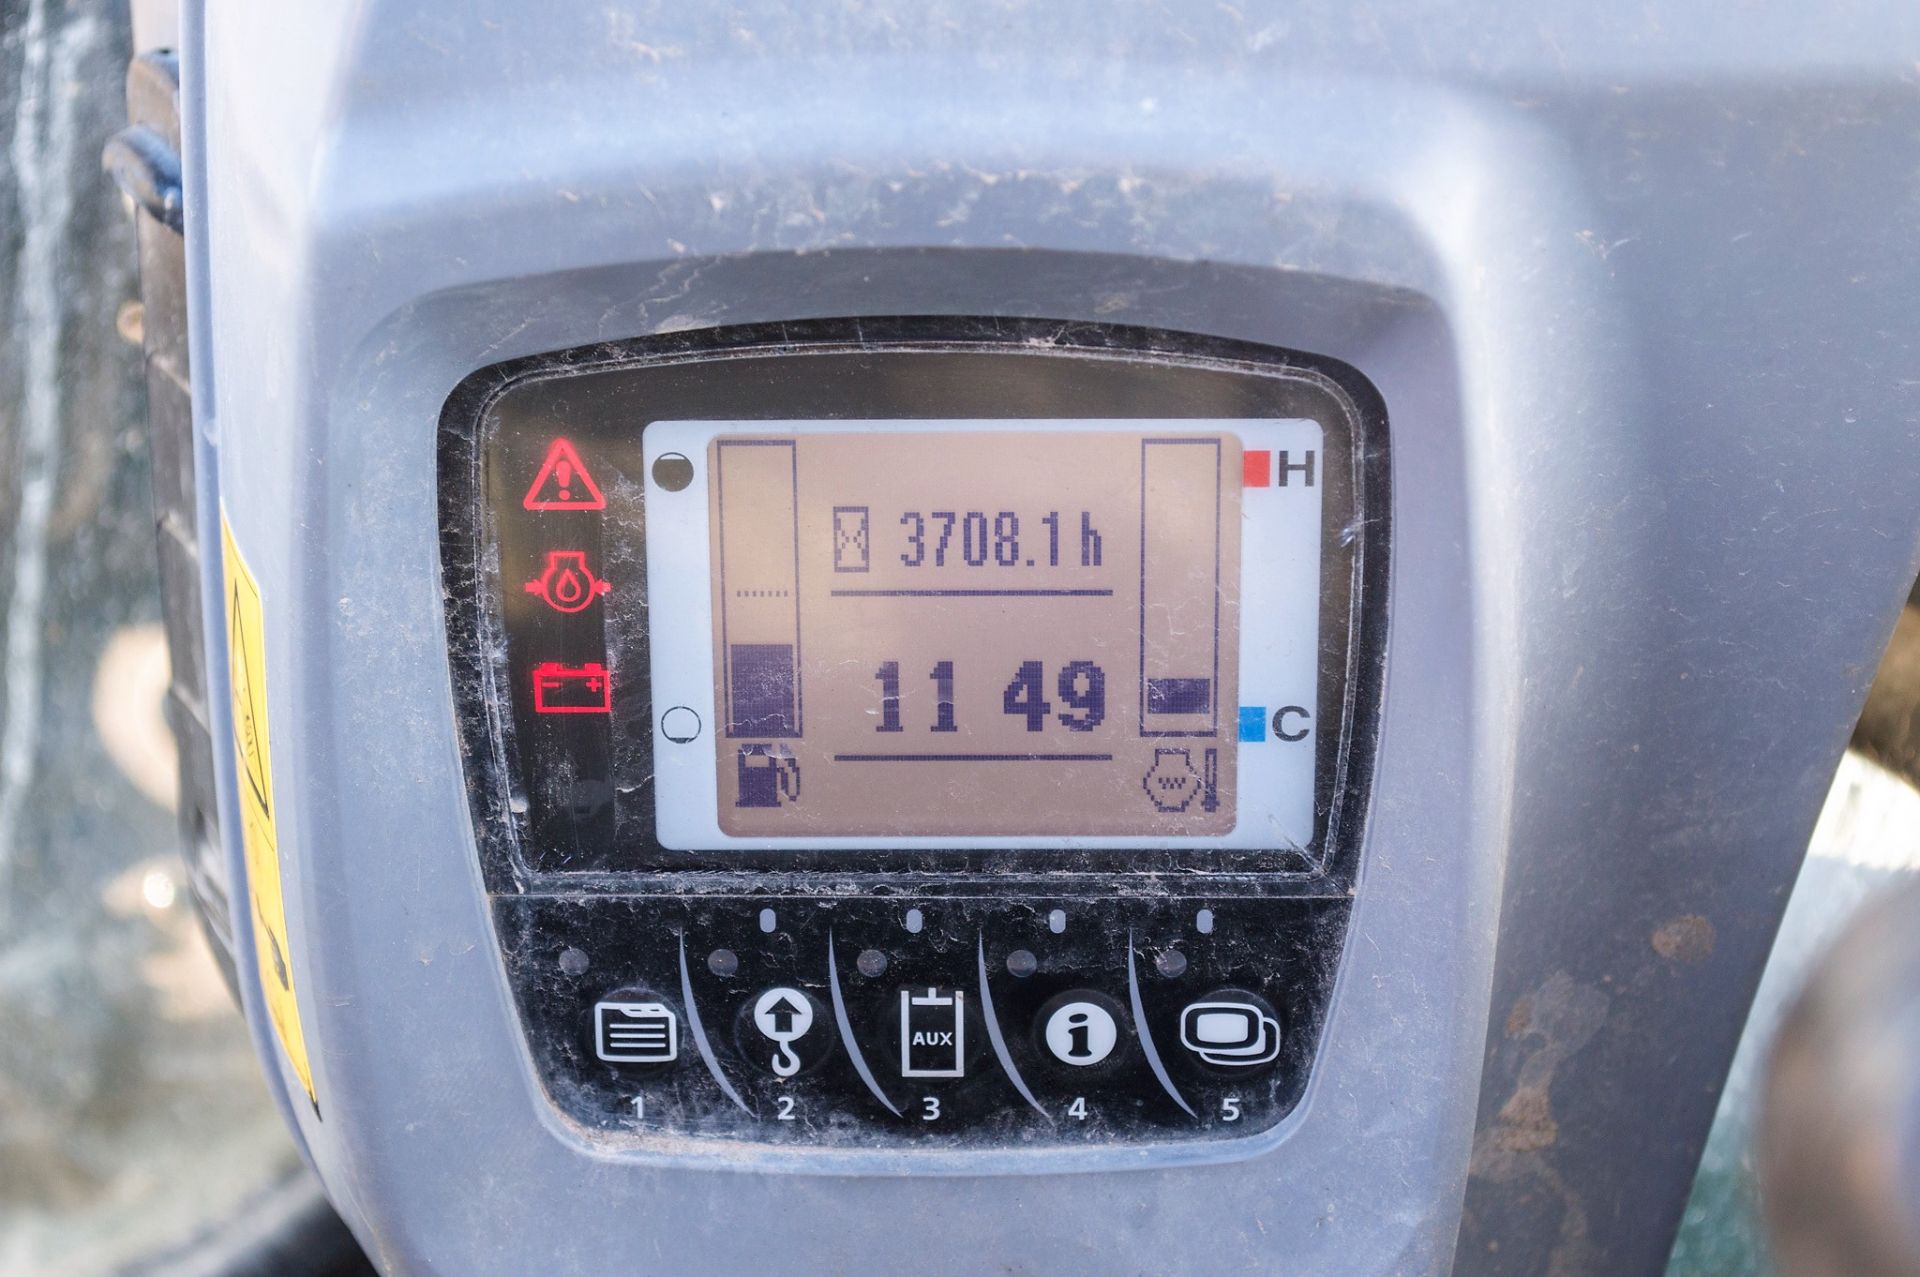 Kubota U55-4 5.5 tonne rubber tracked excavator Year: 2014 S/N: 52741 Recorded Hours: 3708 blade, - Image 19 of 20